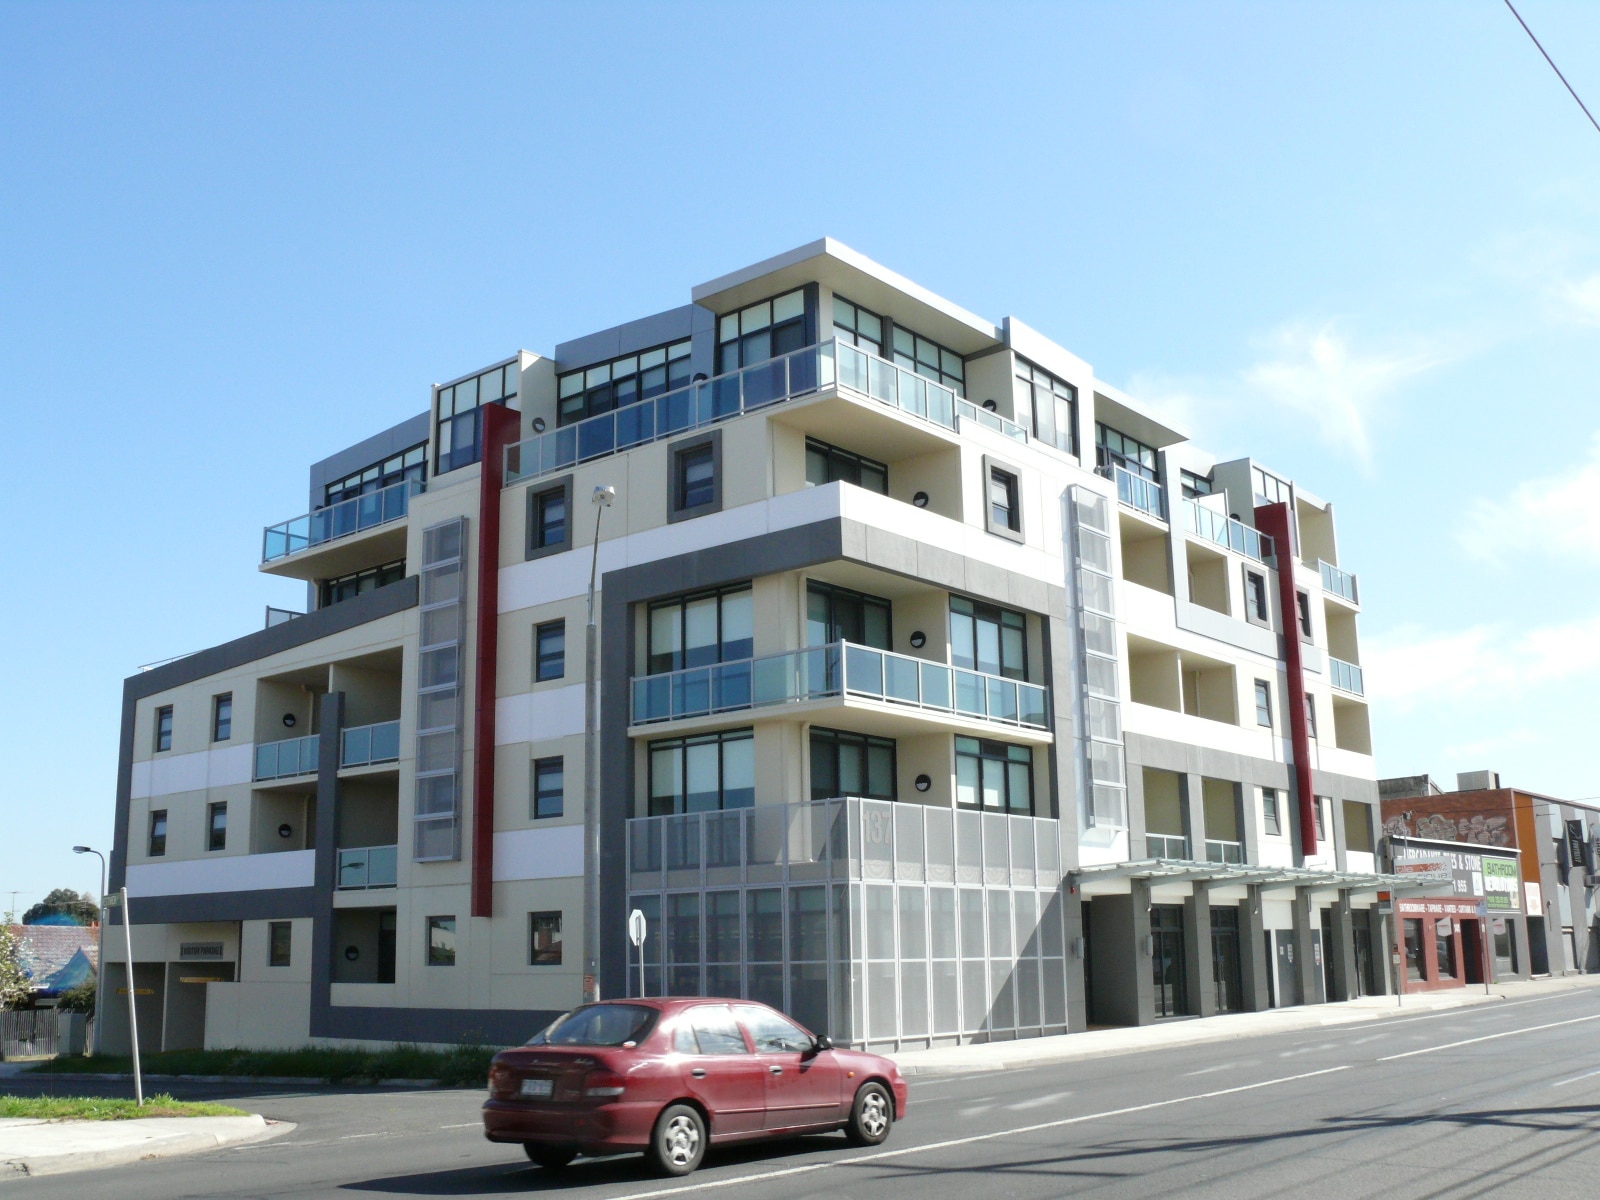 Apartment development, Preston, Melbourne